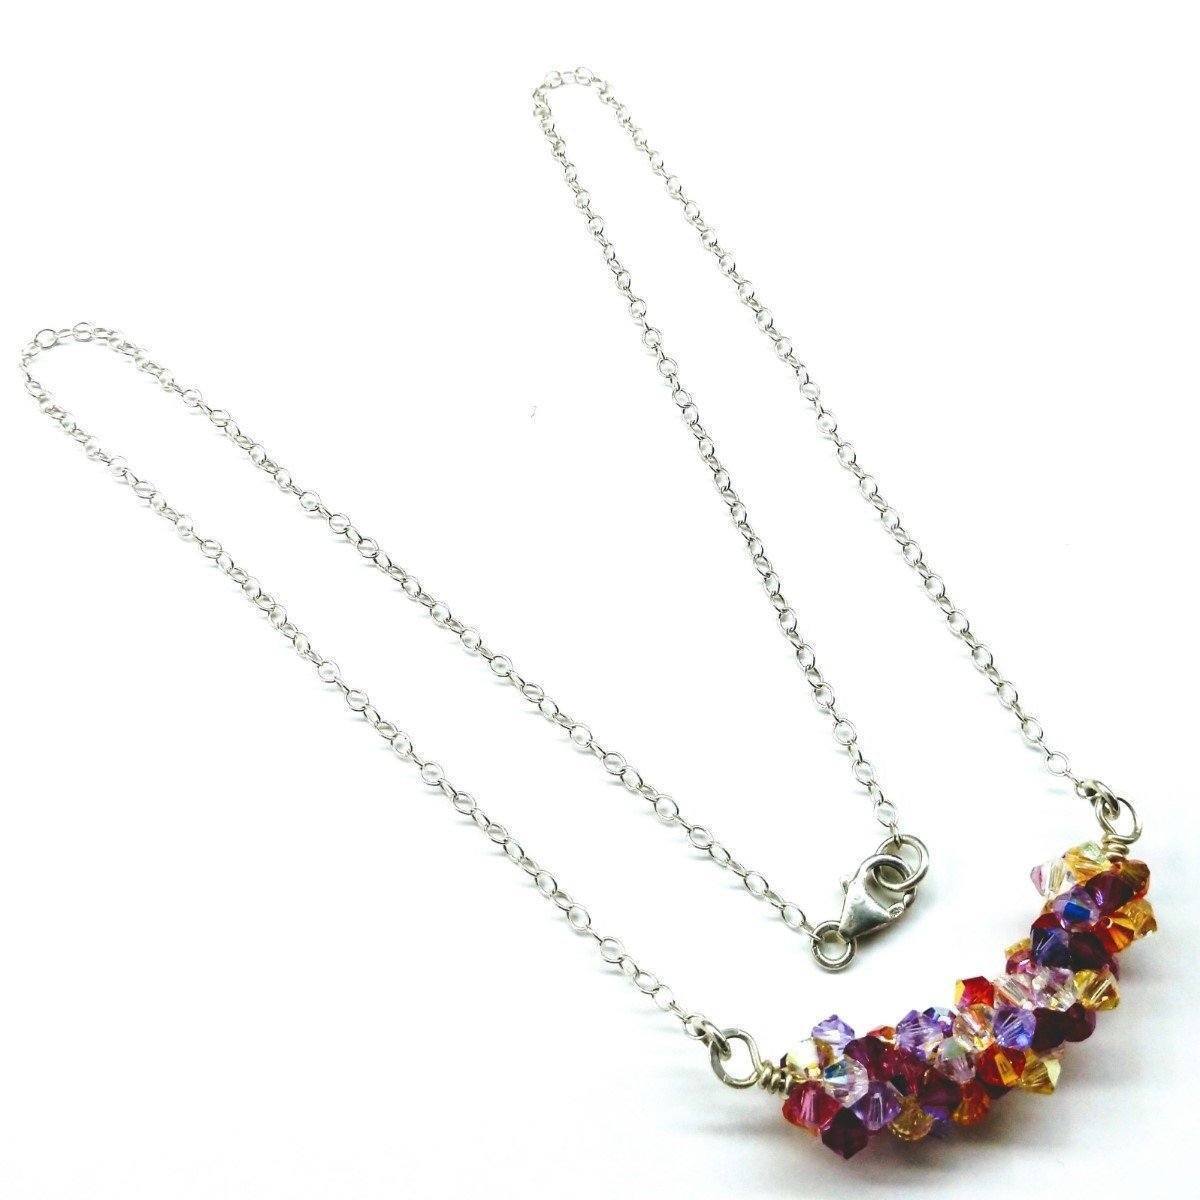 Handmade Silver Spring Blossom Crystal Necklace with Multi-Color Swarovski Crystals - Necklaces - Bijou Her -  -  - 